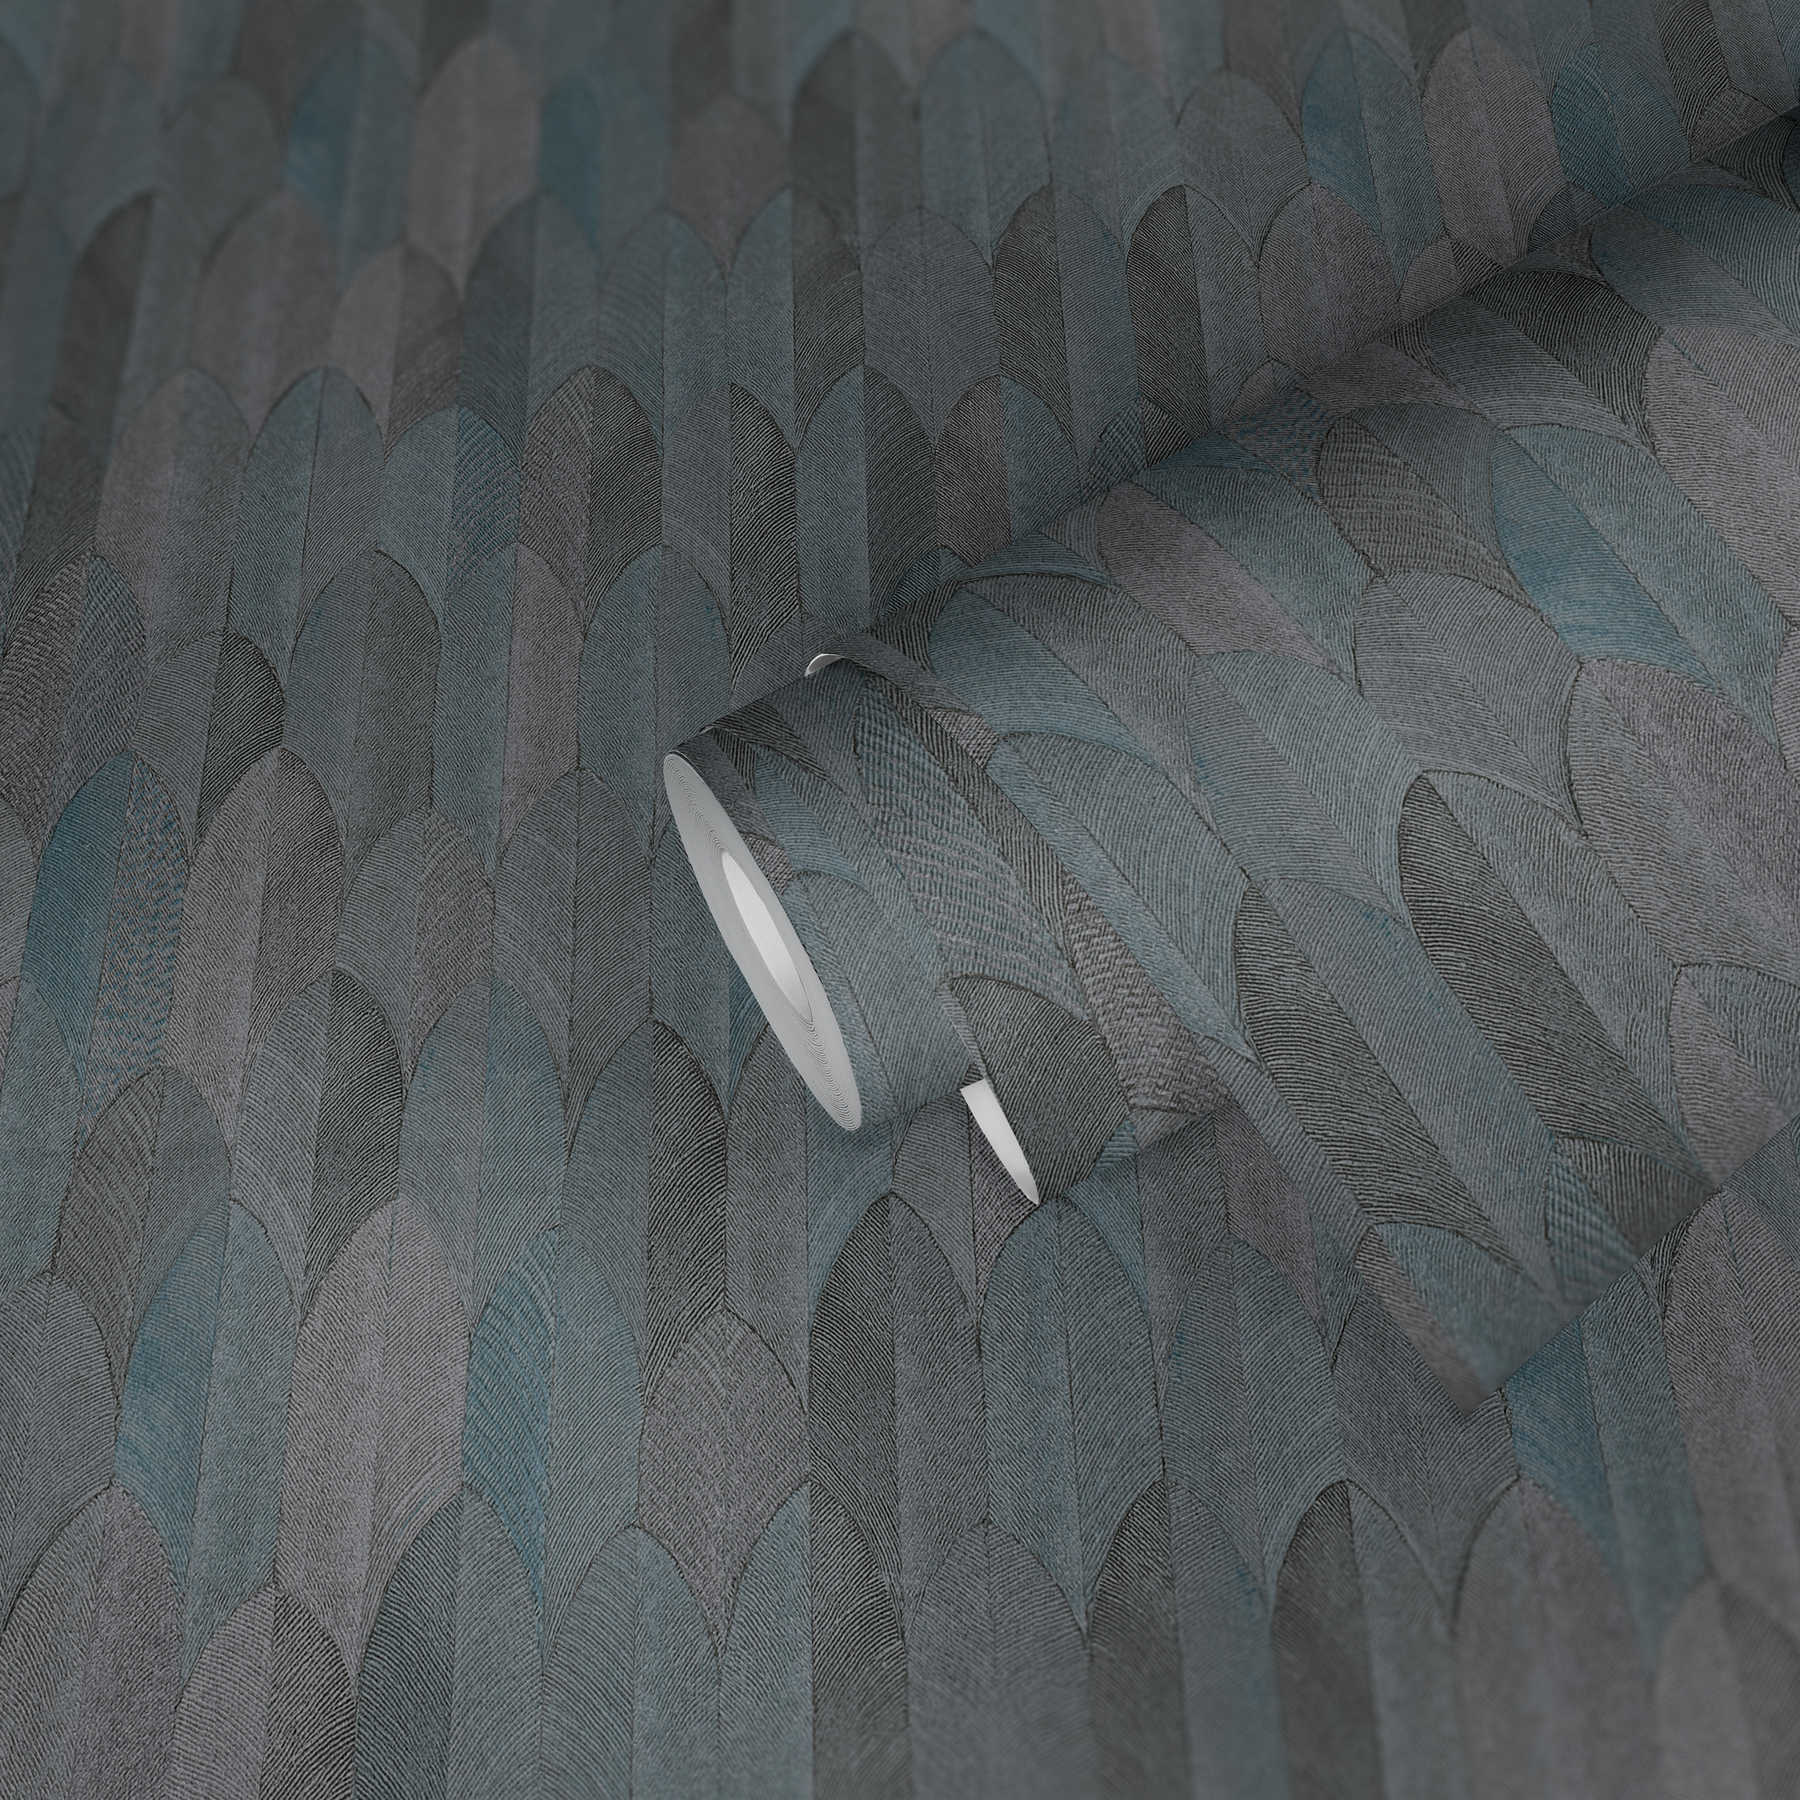             Symetric design wallpaper with metallic effect - grey, blue, black
        